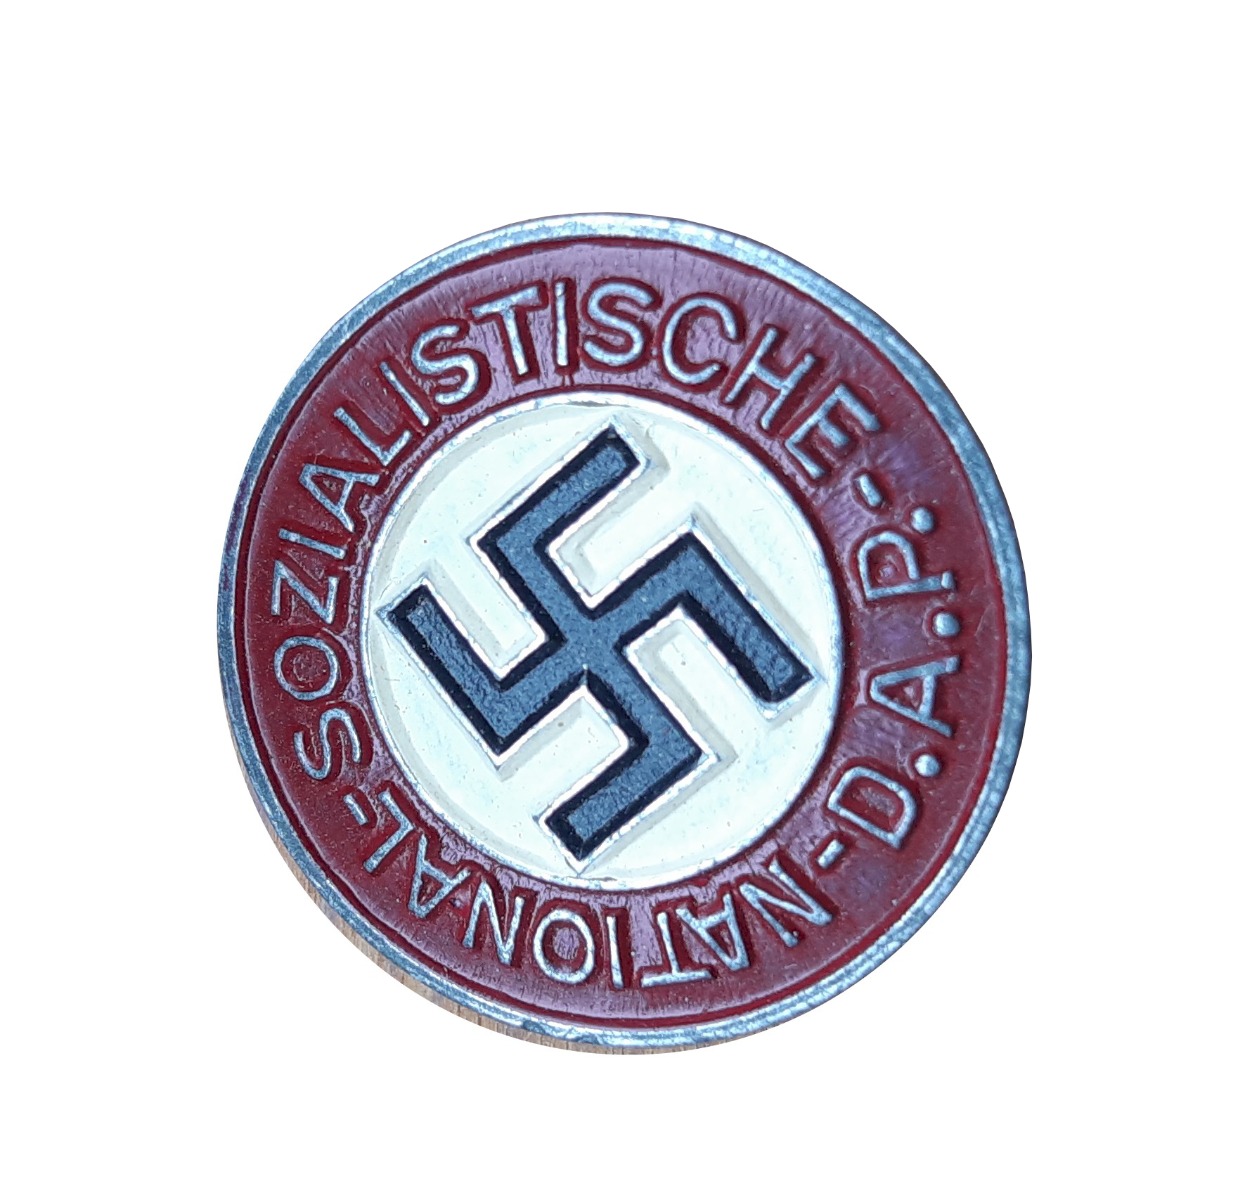 GERMAN NSDAP MEMBERSHIP PARTY BADGE MAKER MARKED M1-17